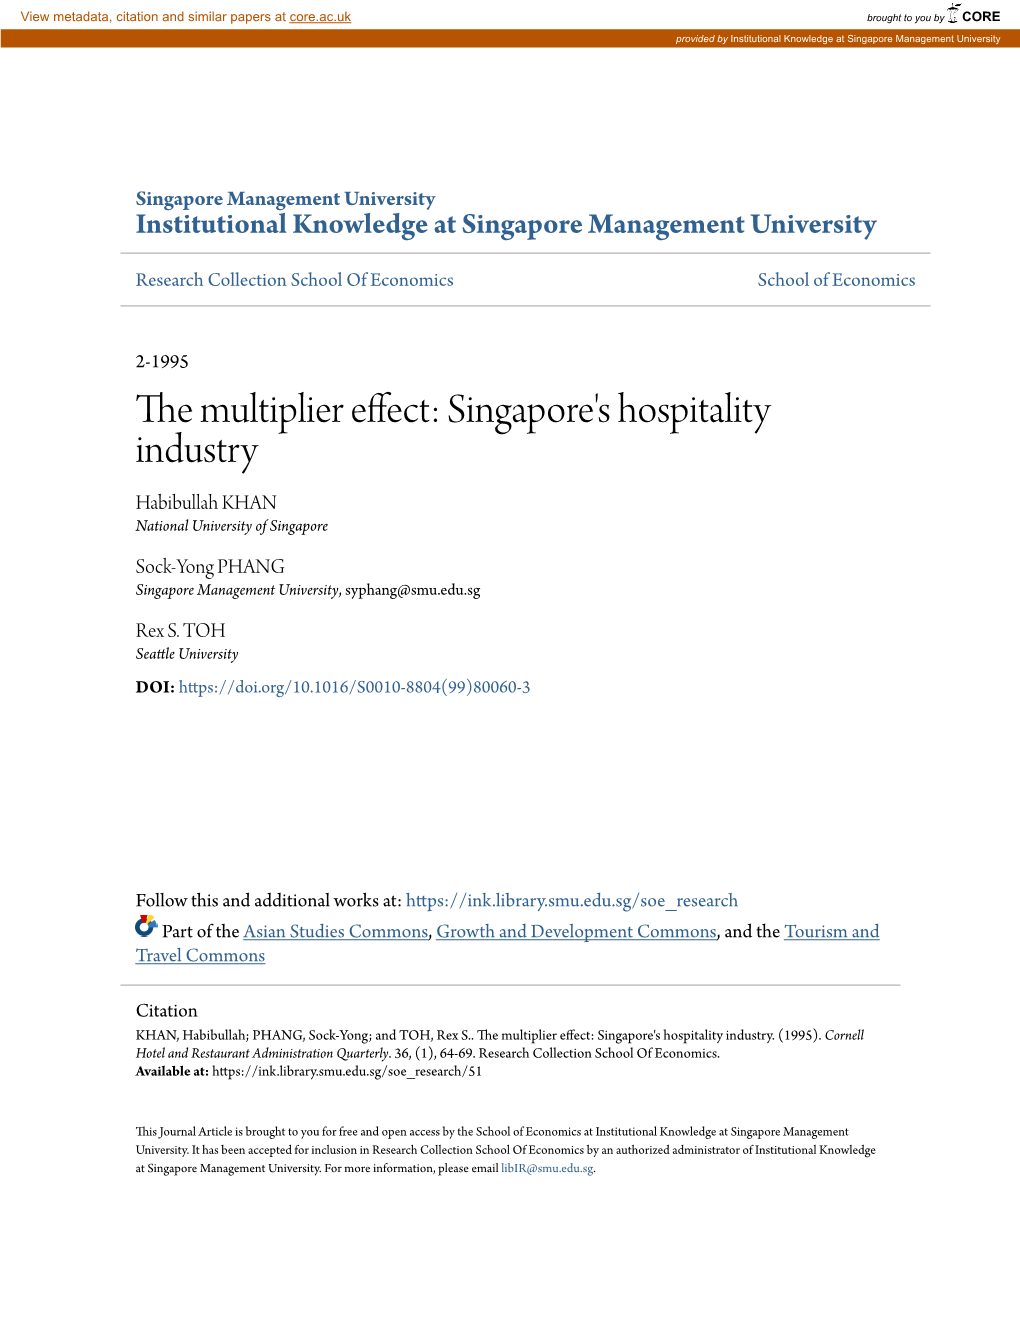 The Multiplier Effect: Singapore's Hospitality Industry Khan, Habibullah; Phang, Sock-Yong; Toh, Rex S